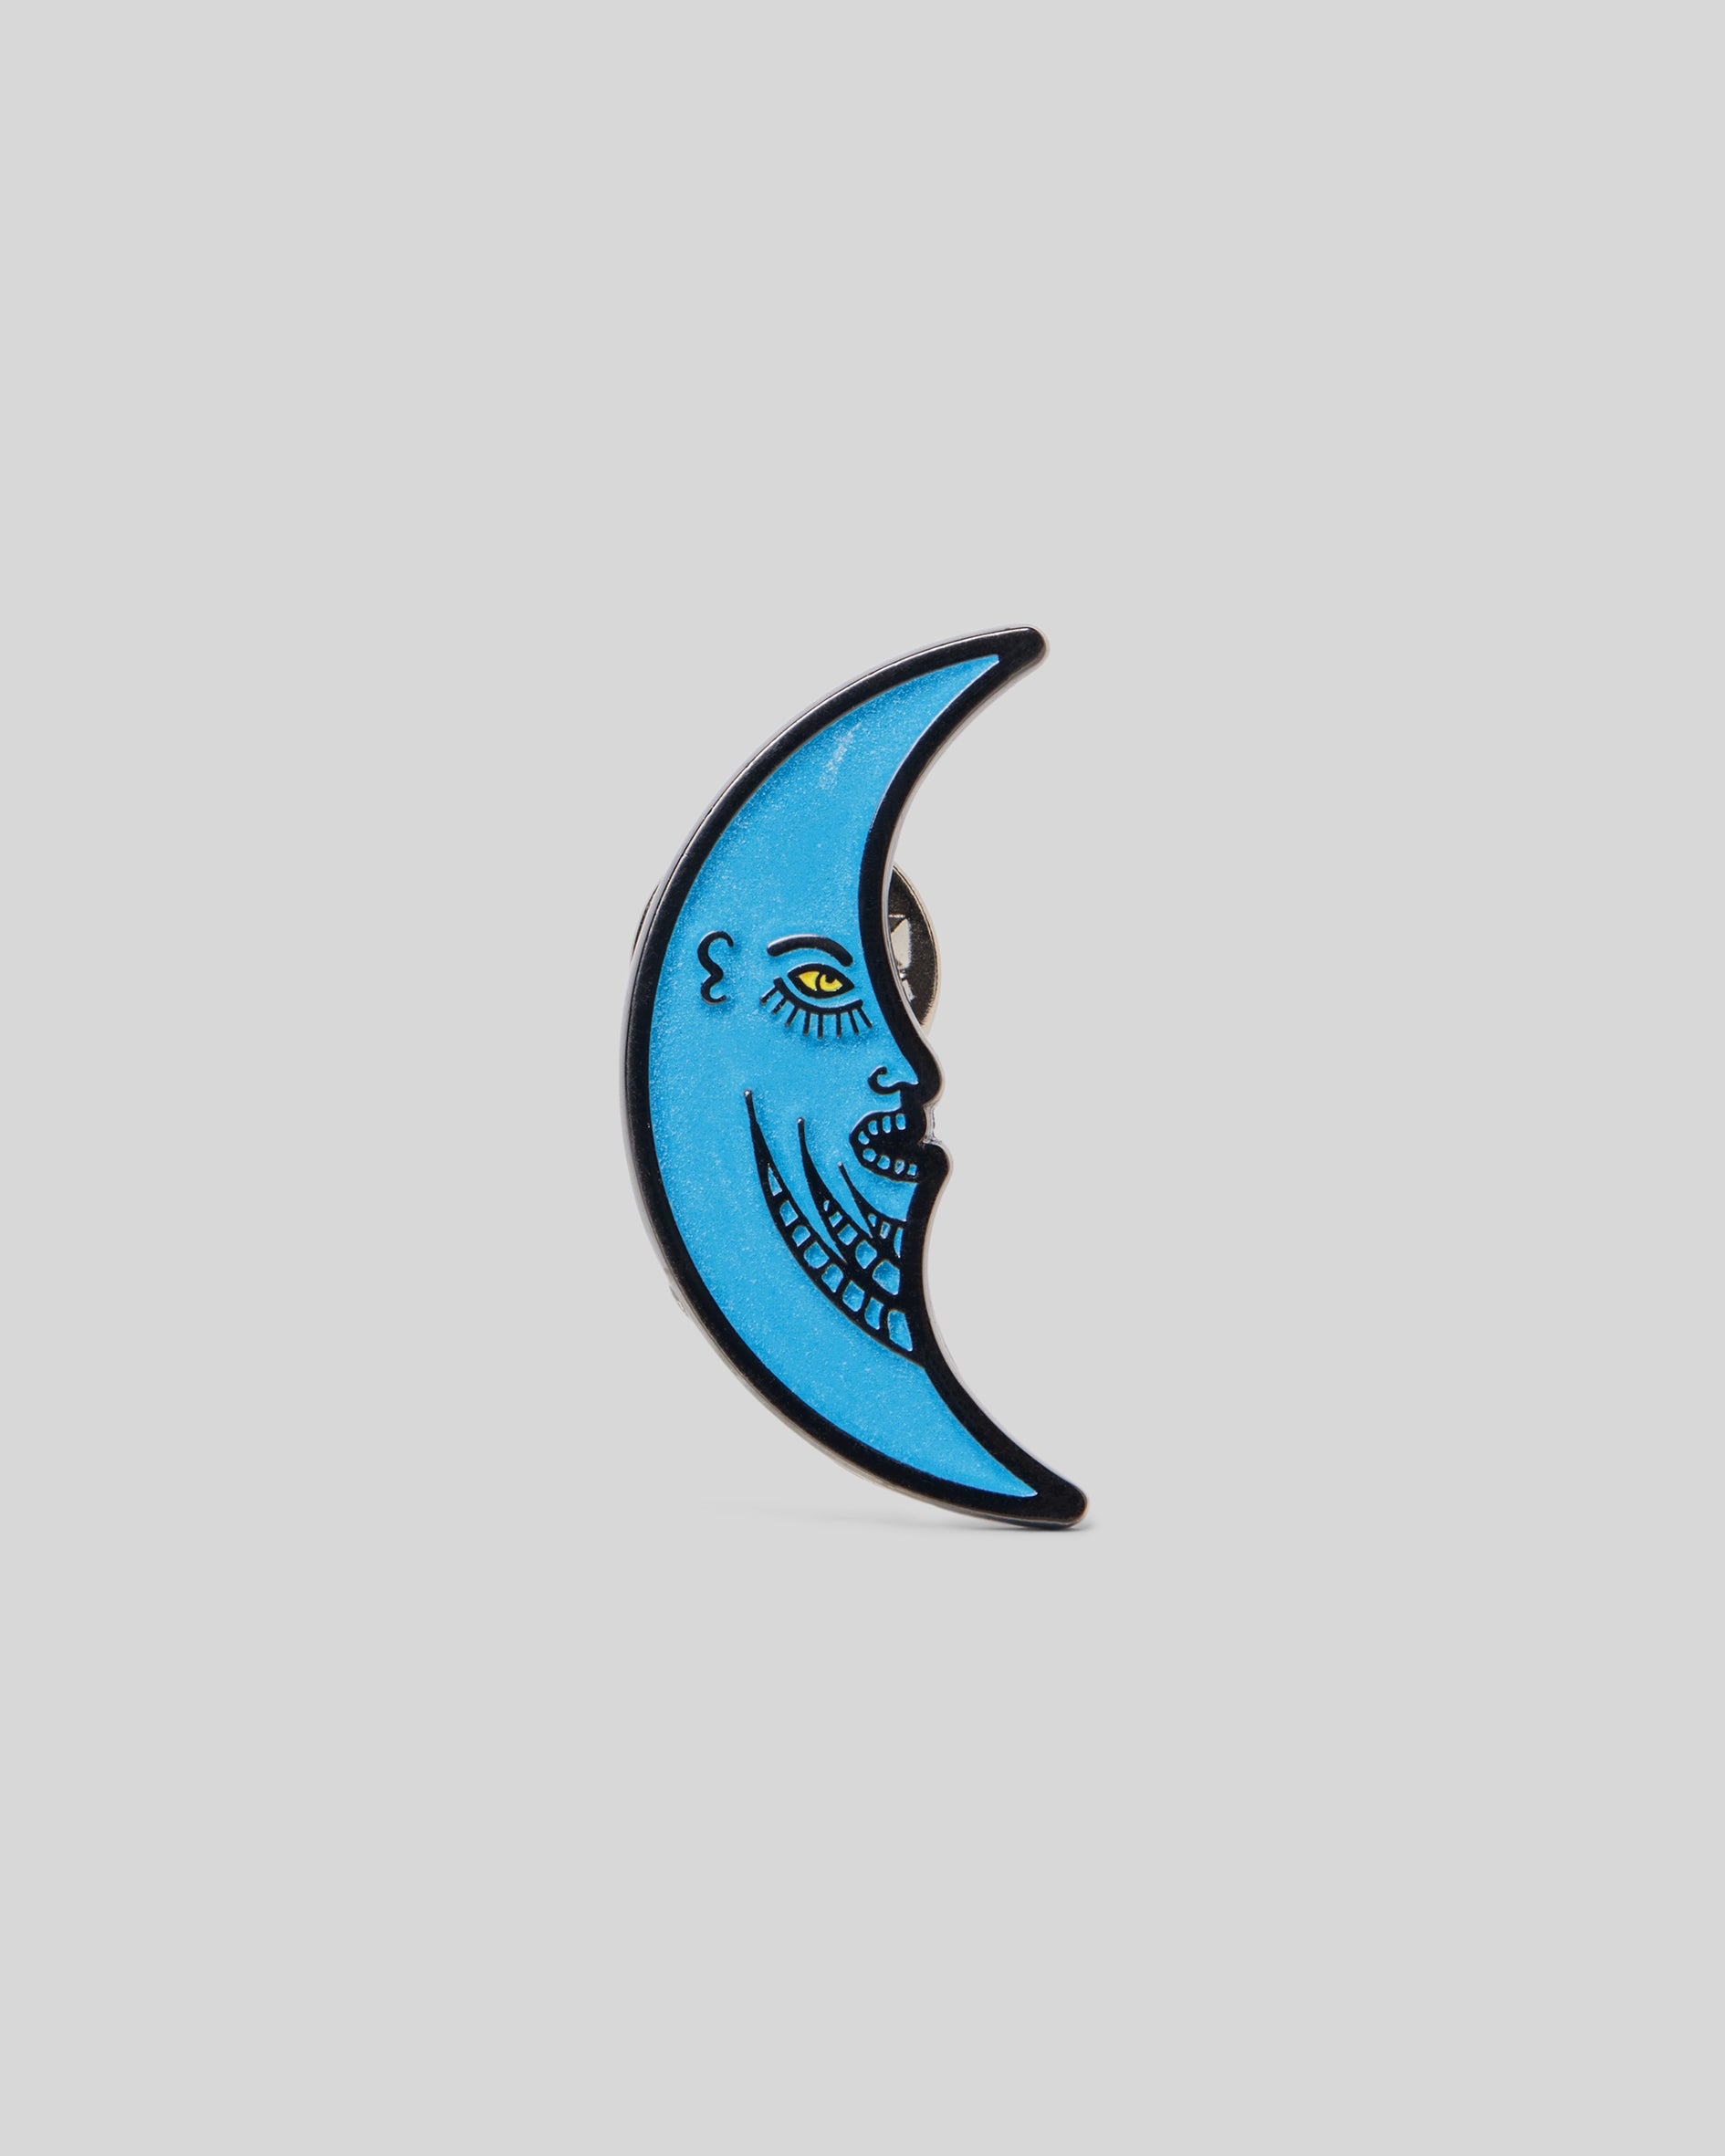 1987 Half Moon Pin. Blue metal half moon face pin.